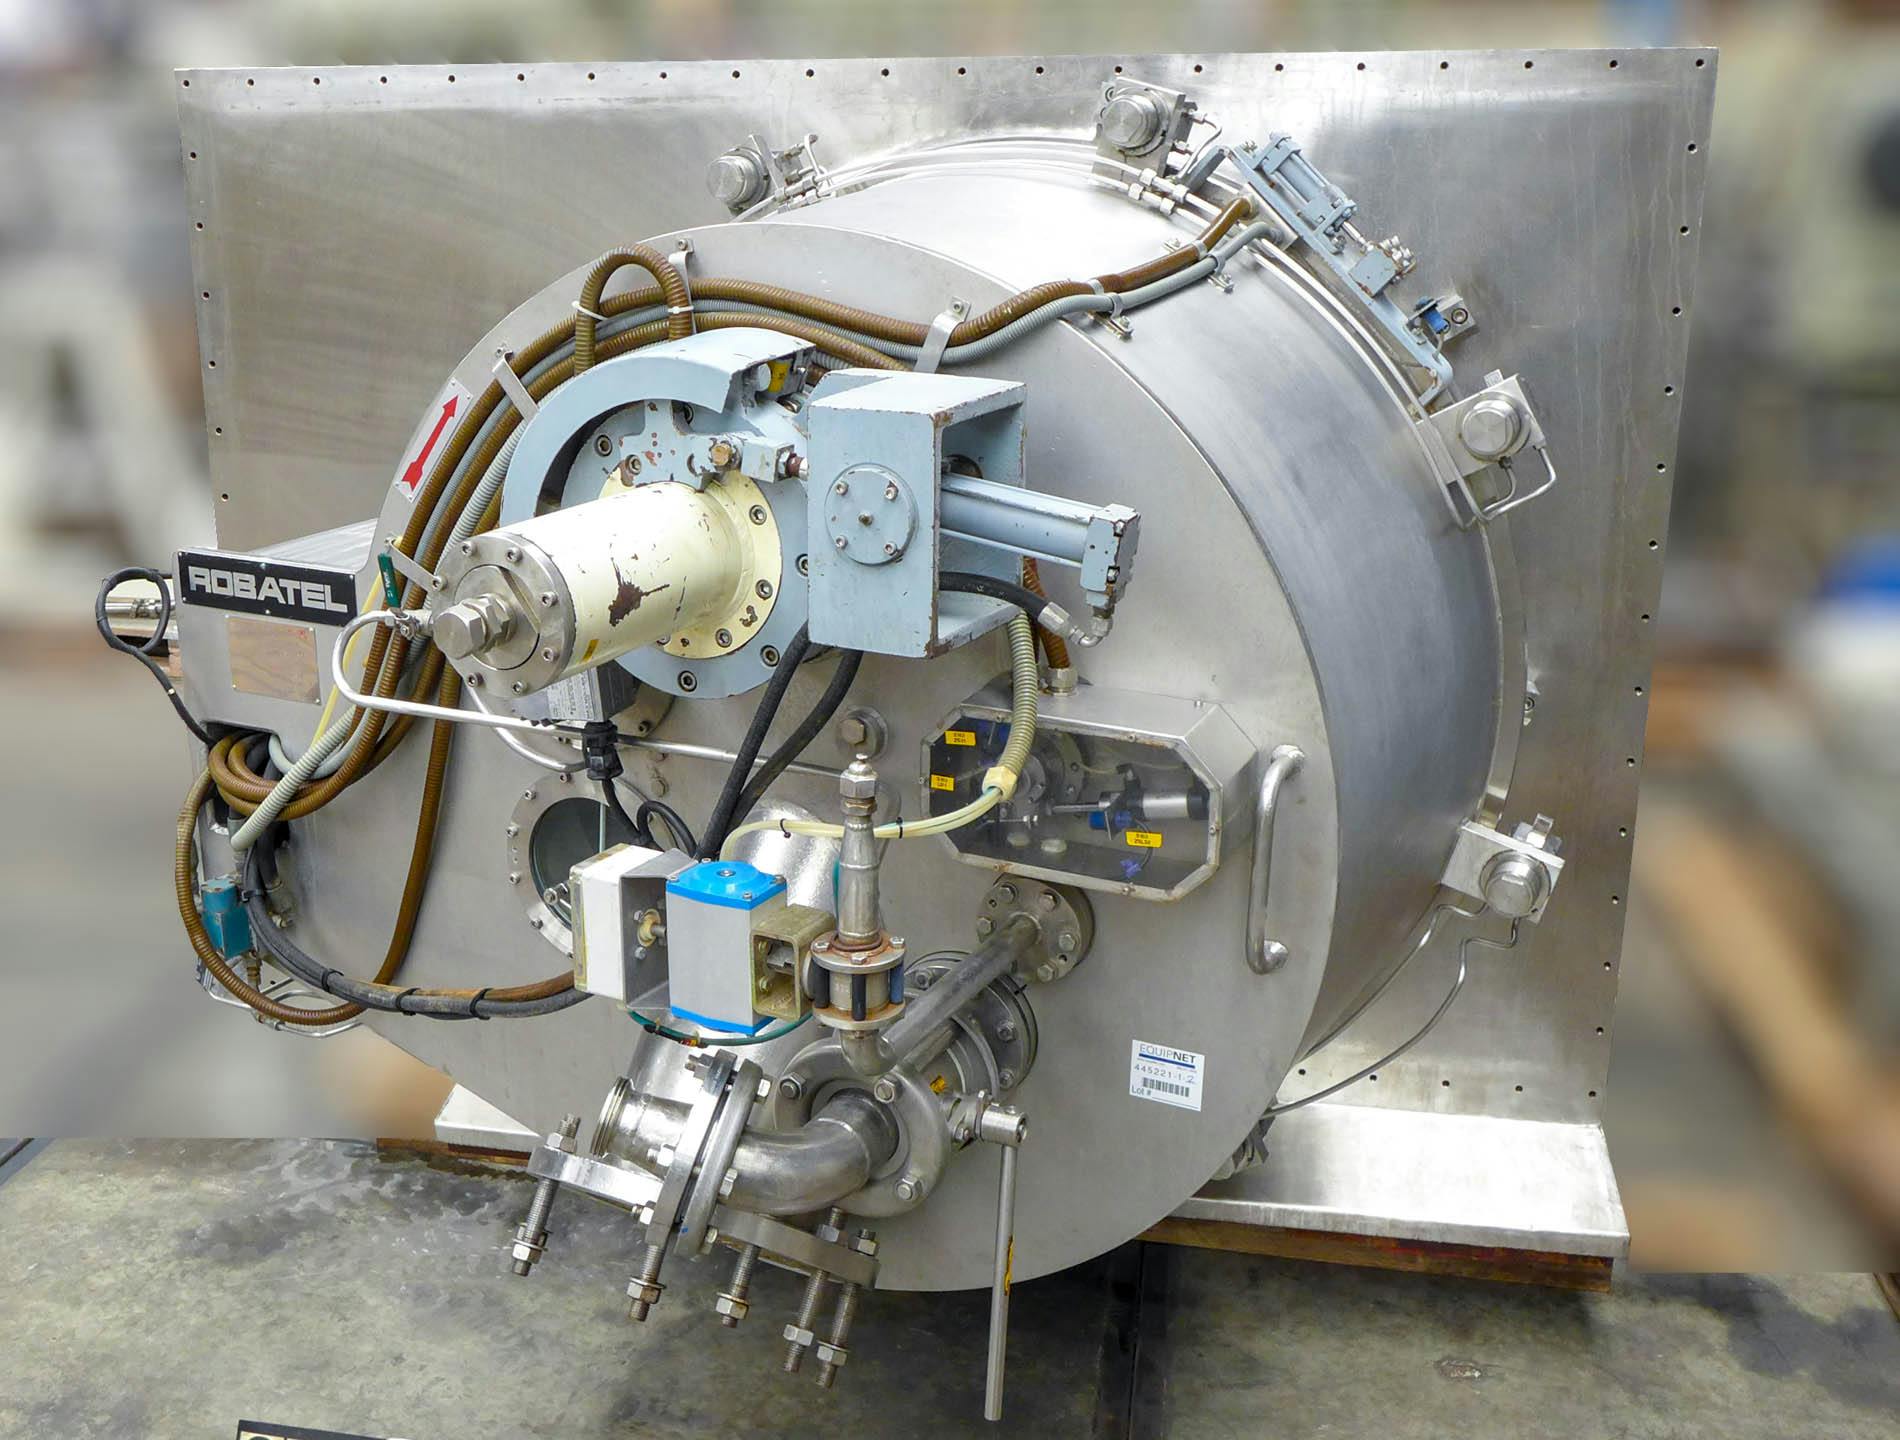 Robatel horizontal peeler centrifuge - Peelingová odstredivka - image 3